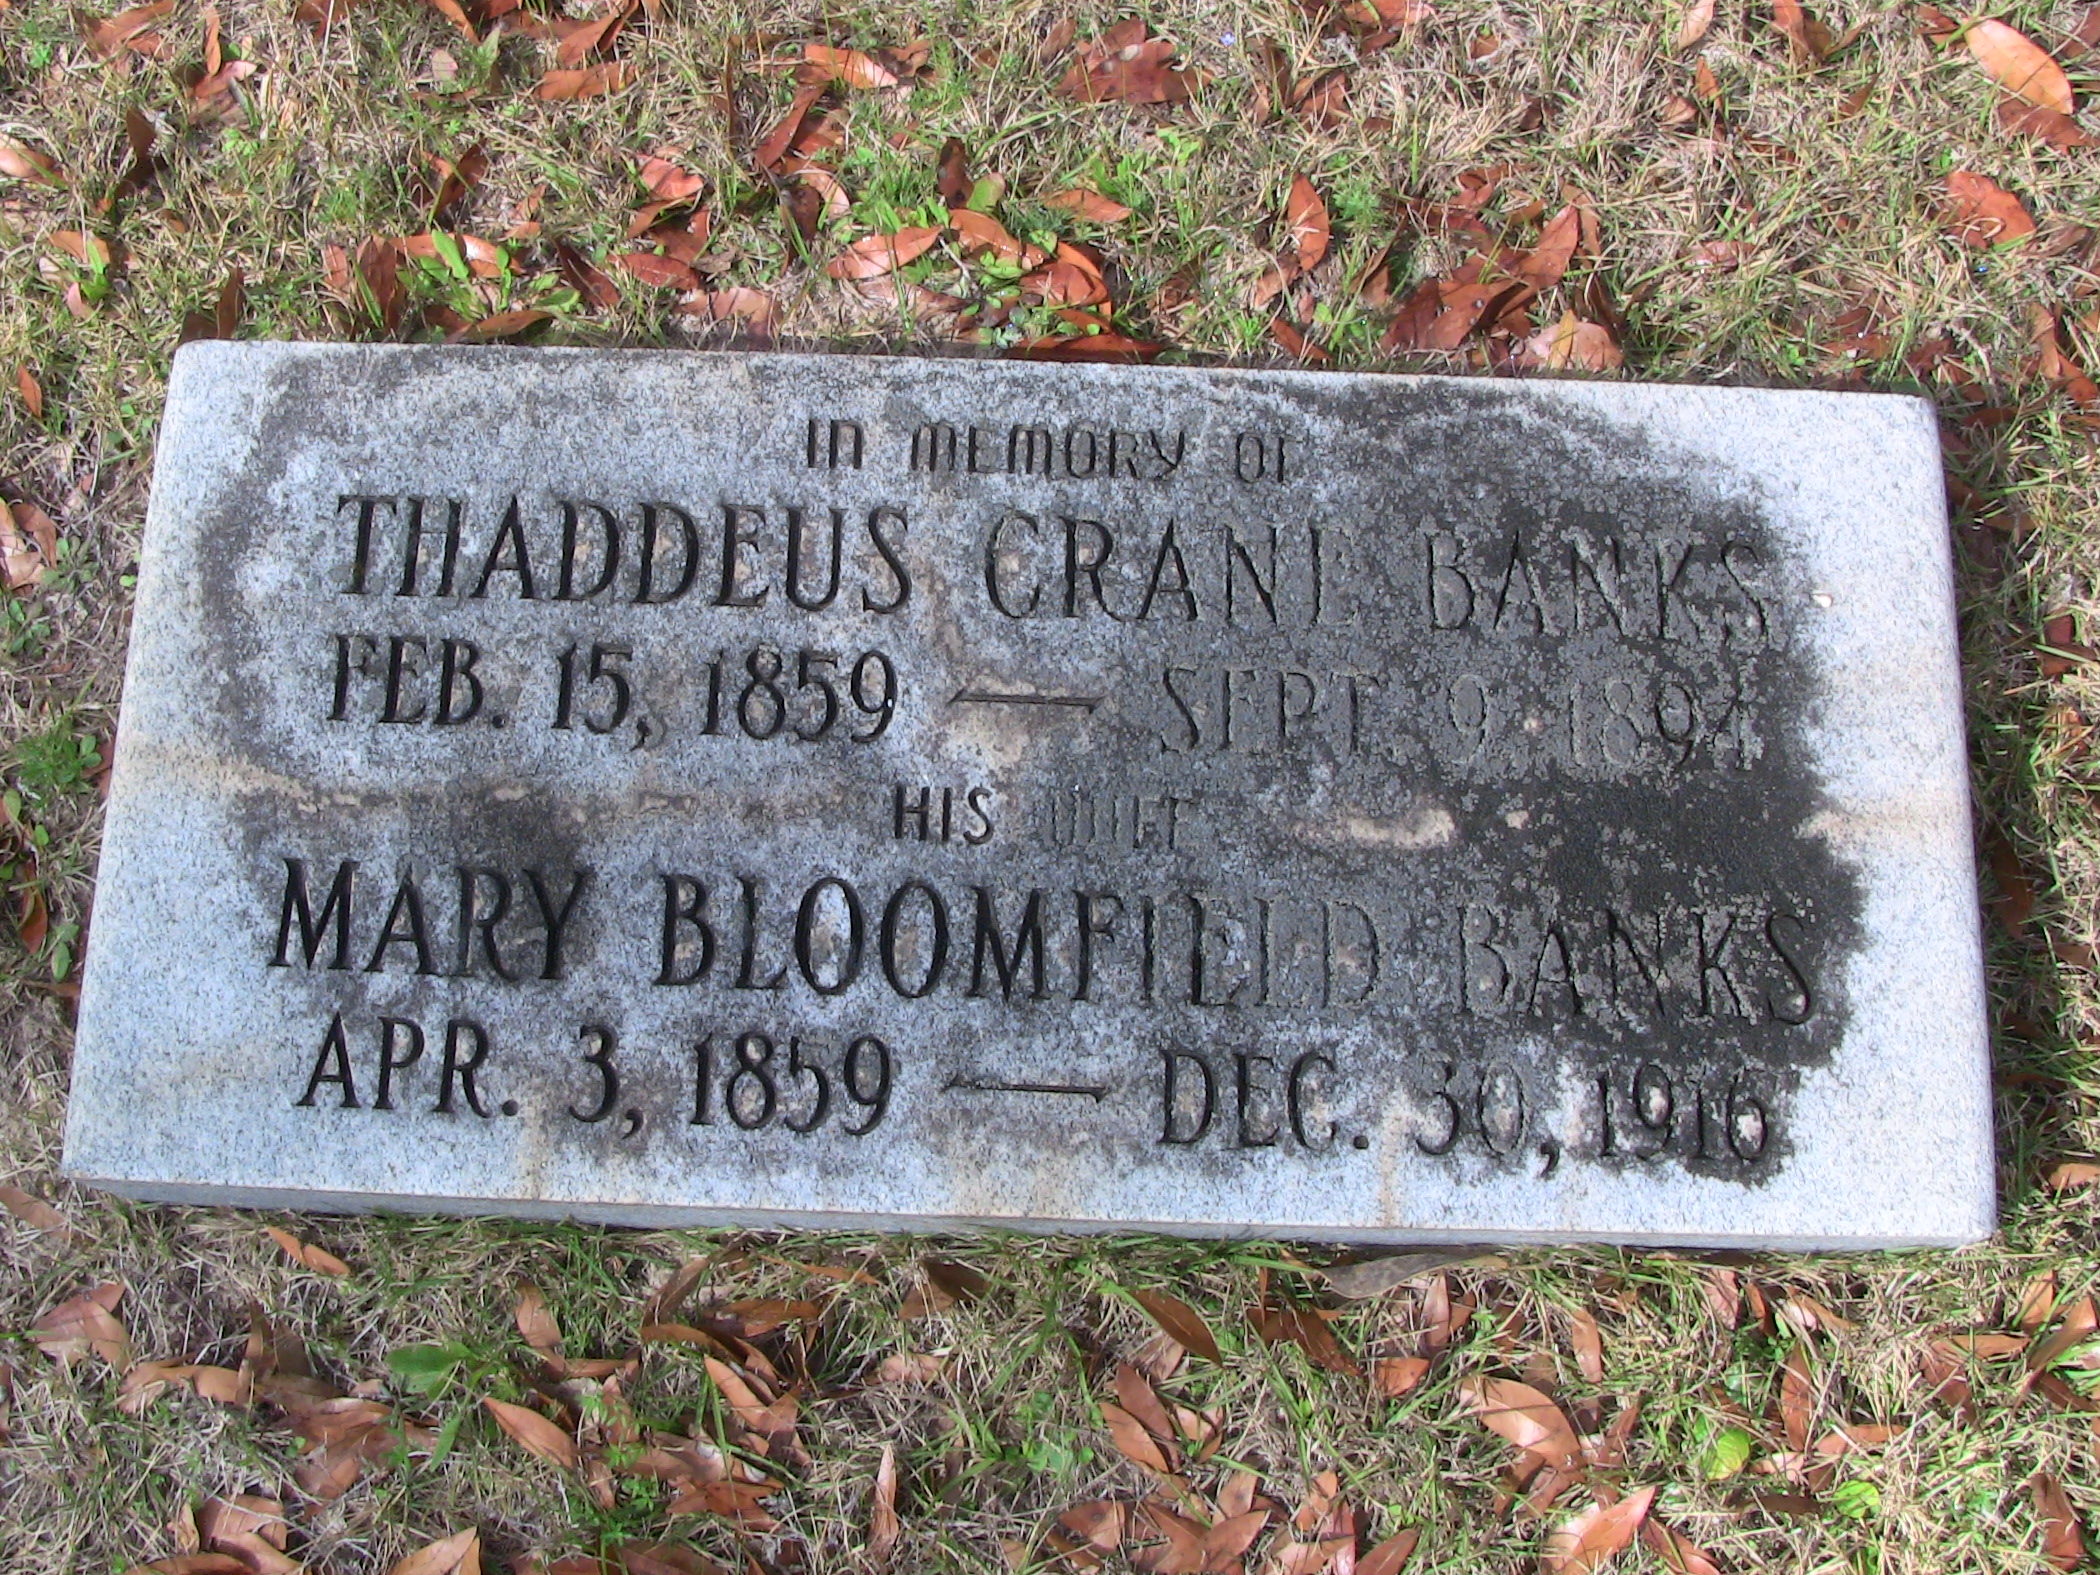 Thaddeus Crane Banks